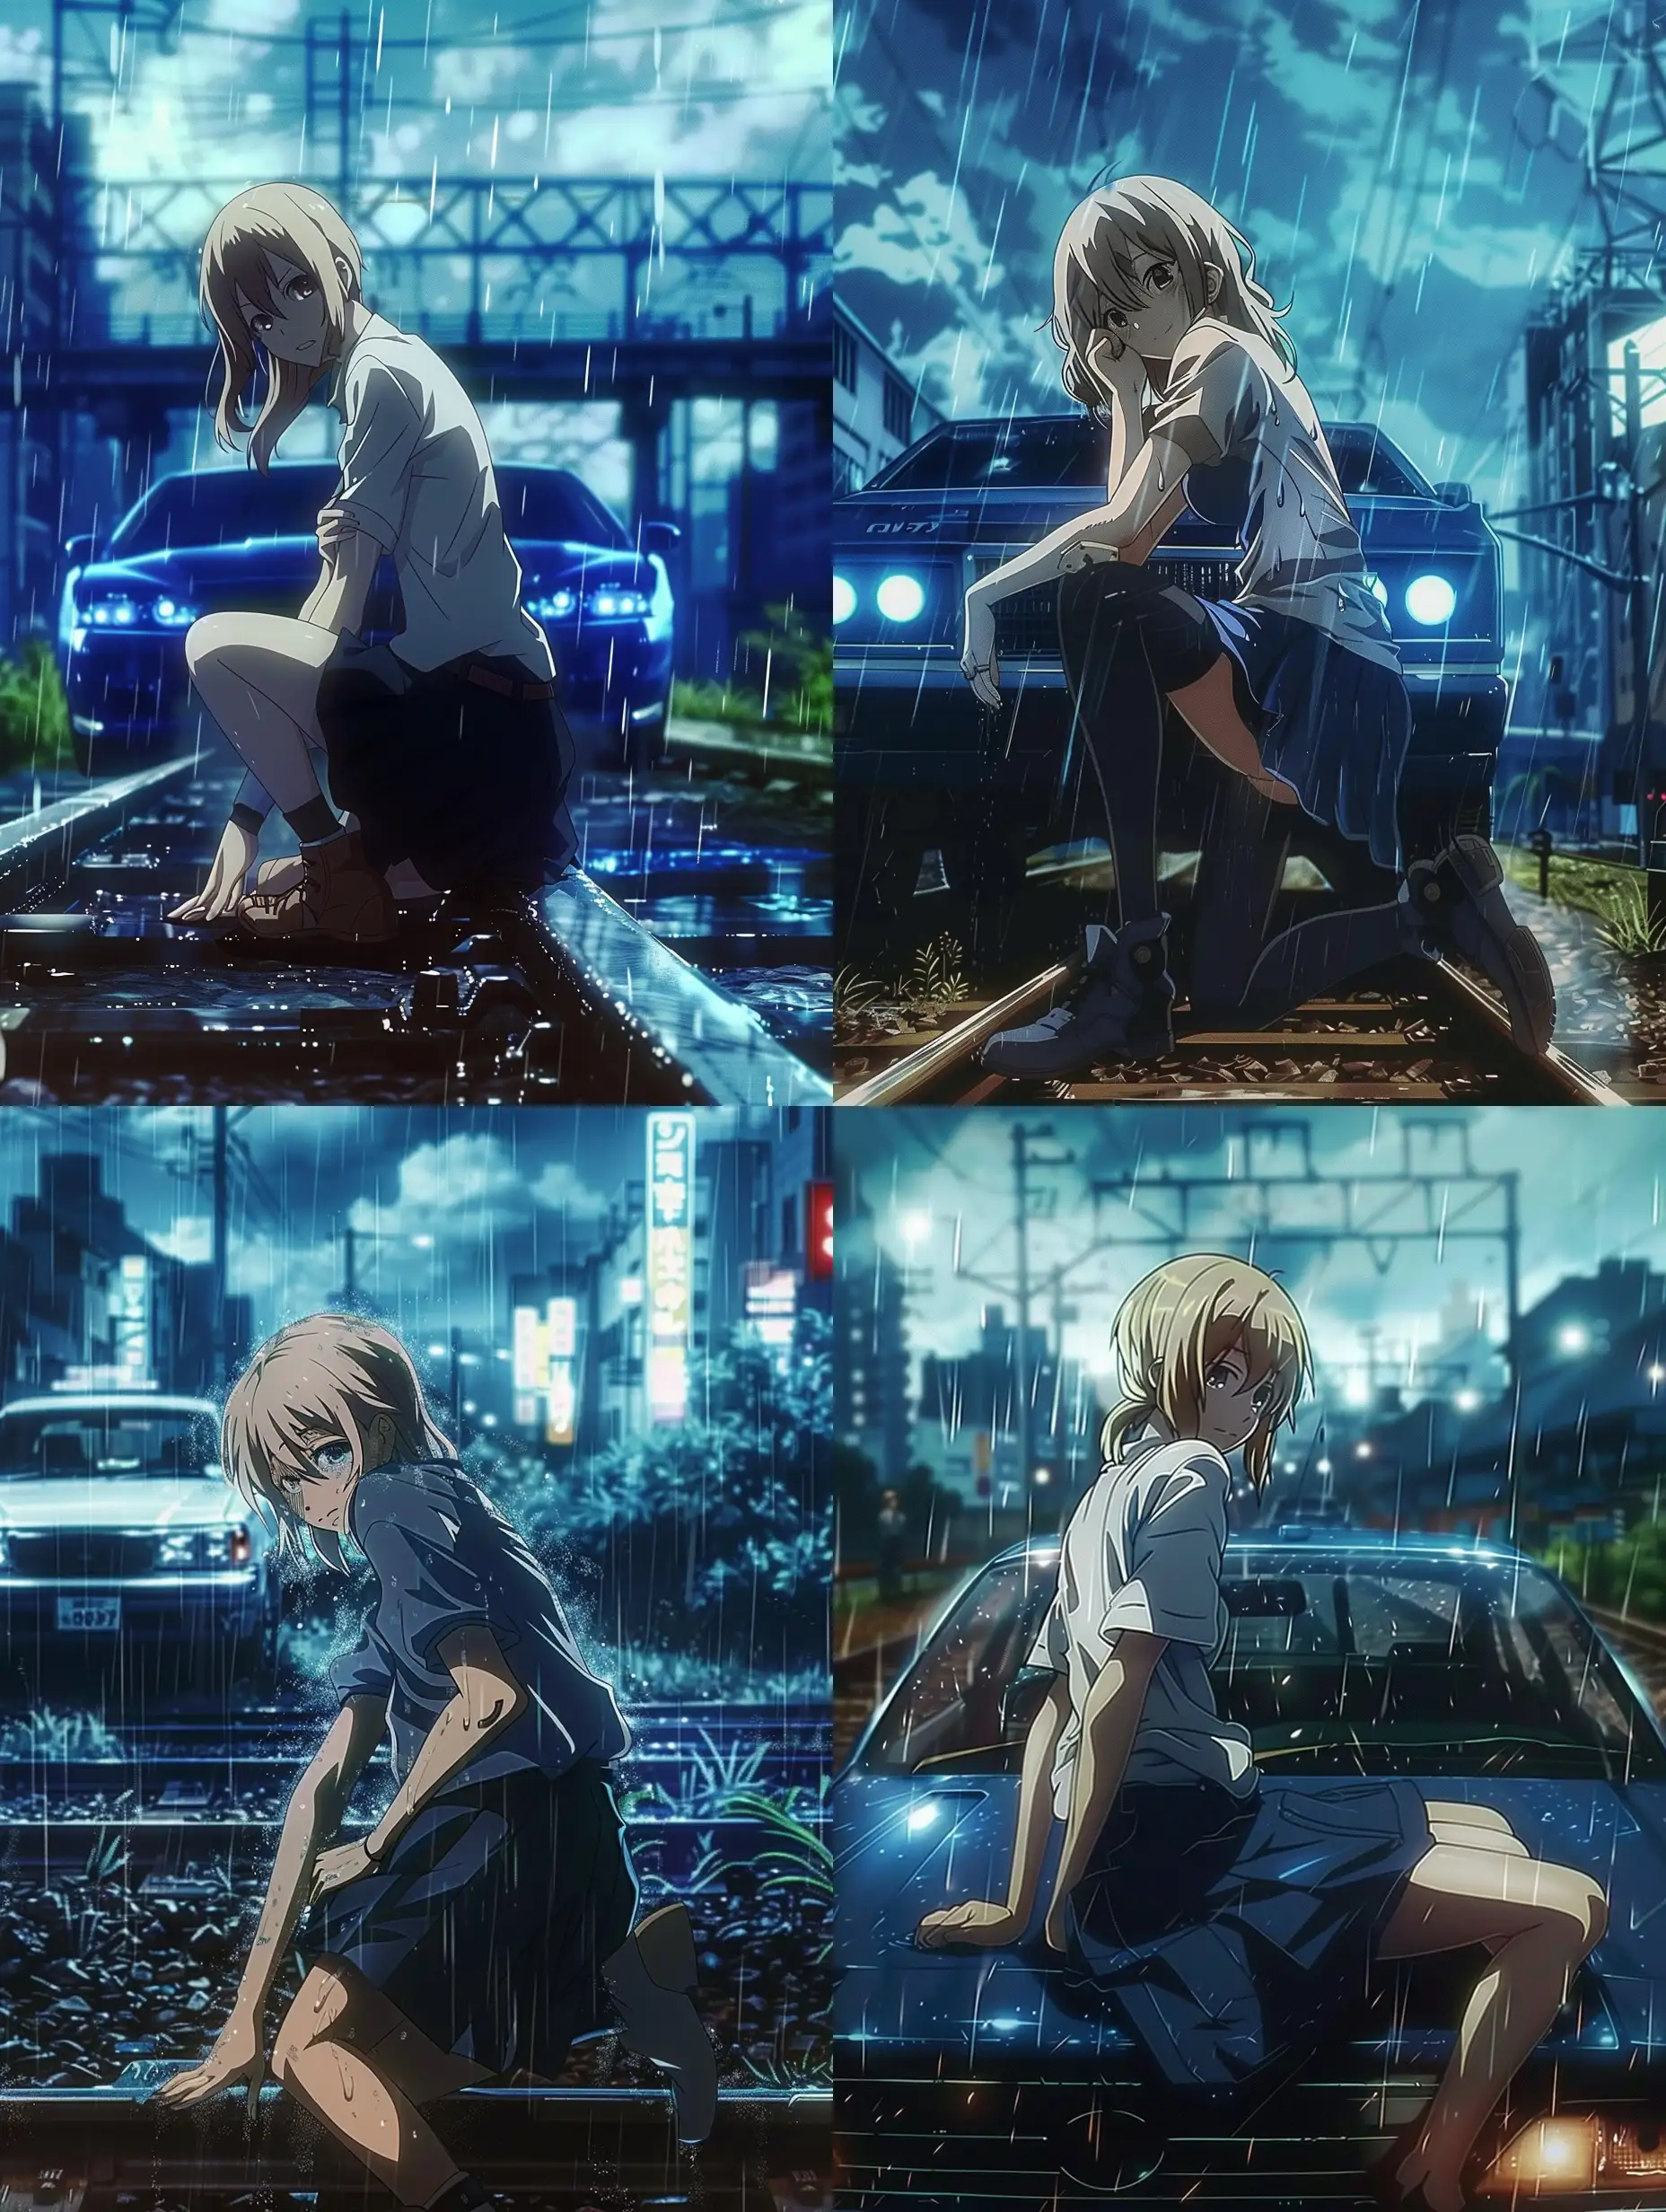 Cyberpunk-Anime-Character-Leans-on-Car-in-Rainy-Urban-Setting